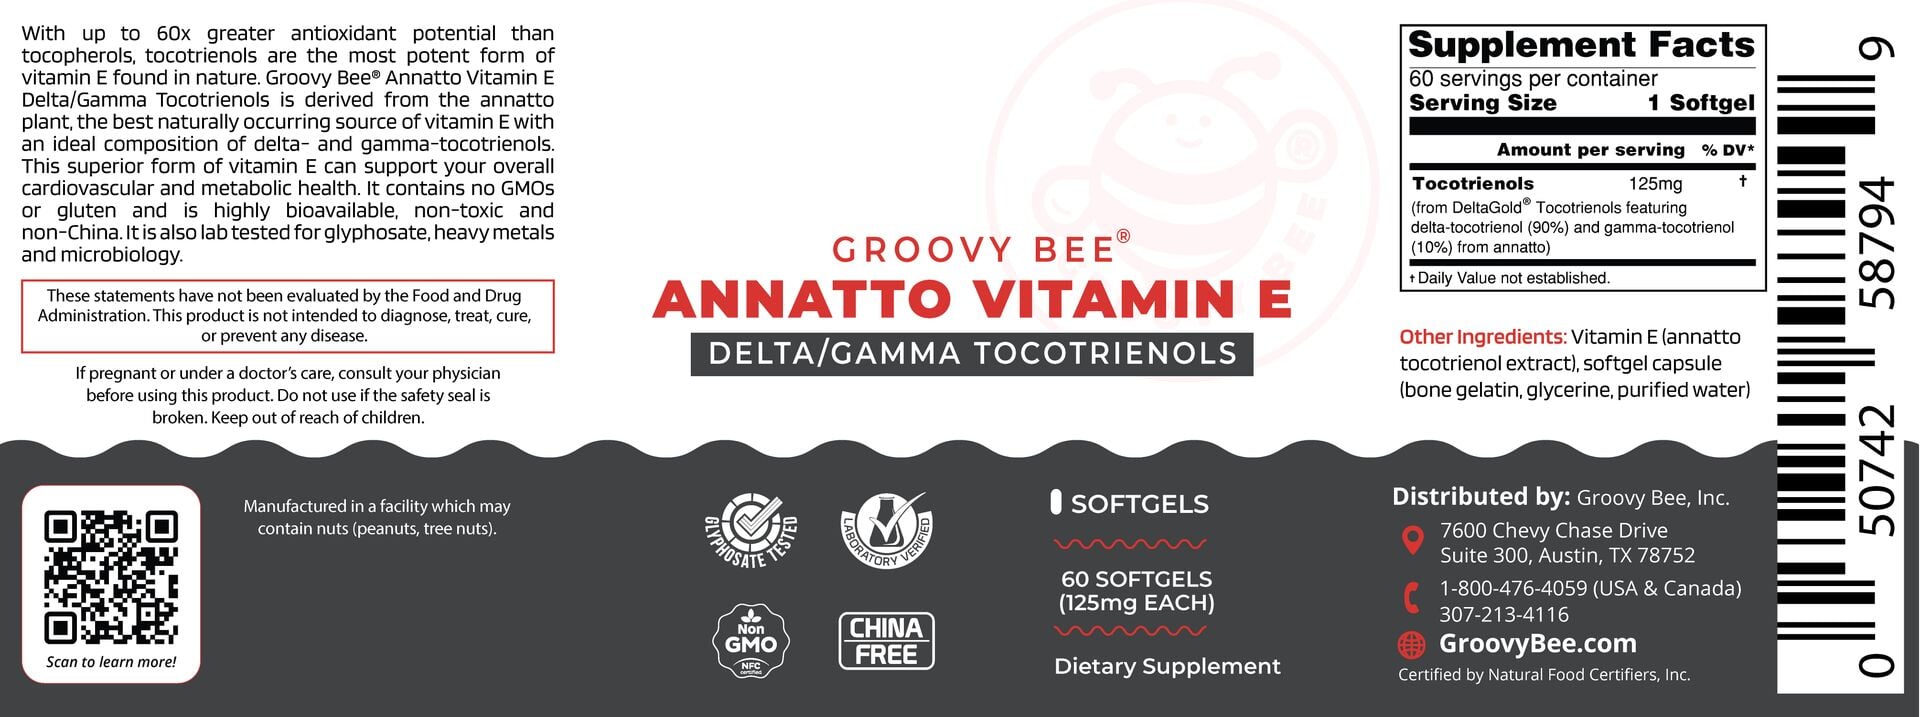 Annatto Vitamin E Delta/Gamma Tocotrienols 125mg 60 Softgels Supplements Brighteon Store 